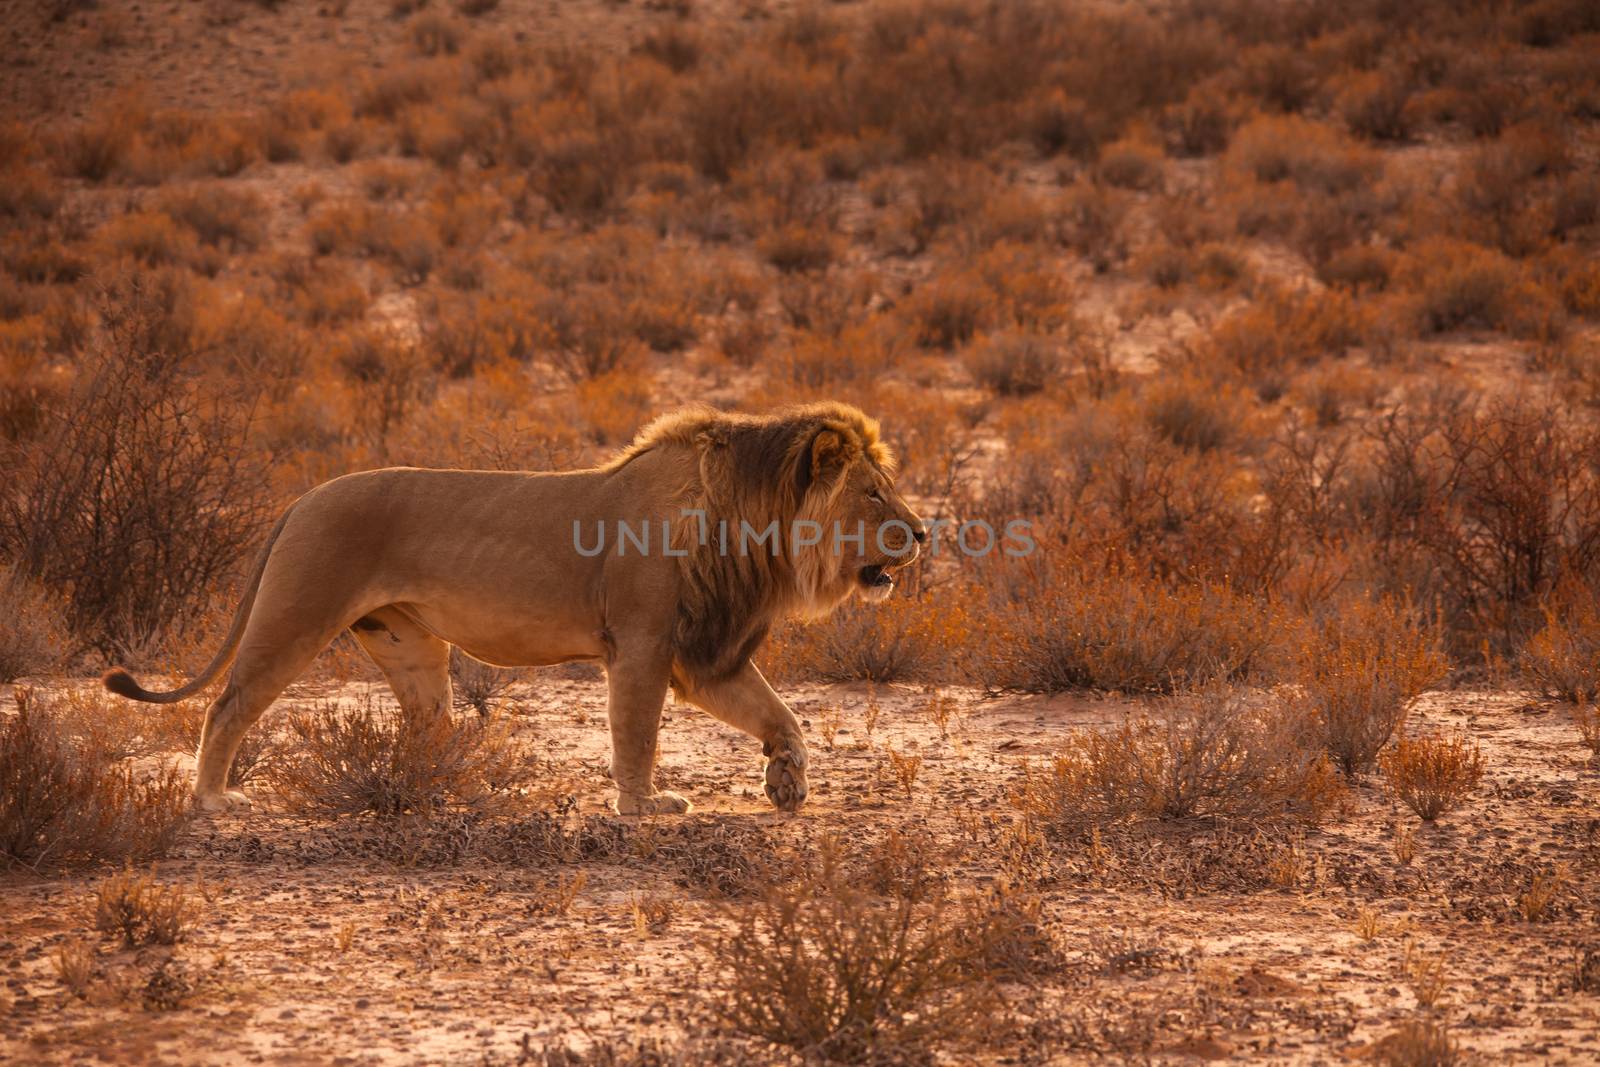 Kalahari Lion 5183 by kobus_peche